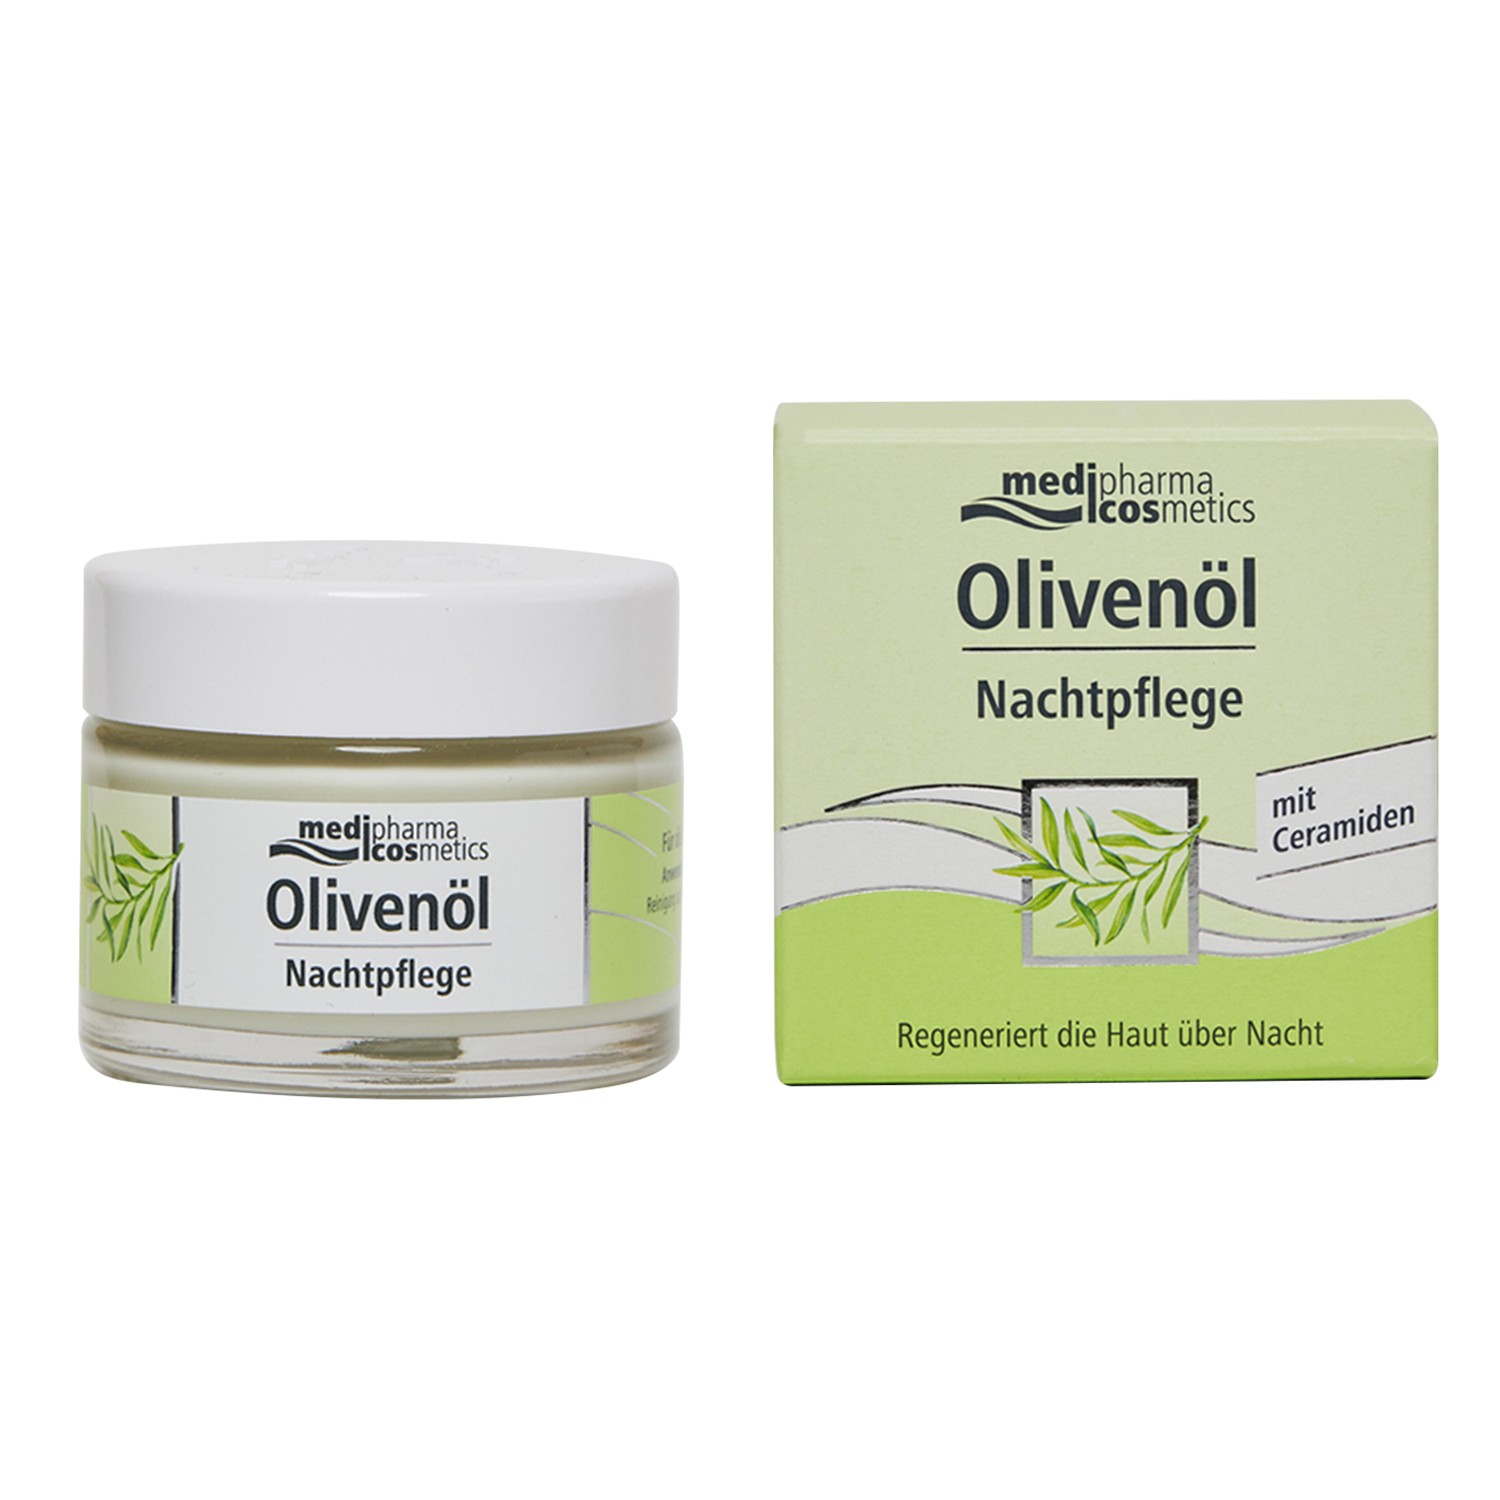 Medipharma Cosmetics Ночной крем для лица Olivenol, 50 мл (Medipharma Cosmetics, Olivenol), Германия  - Купить